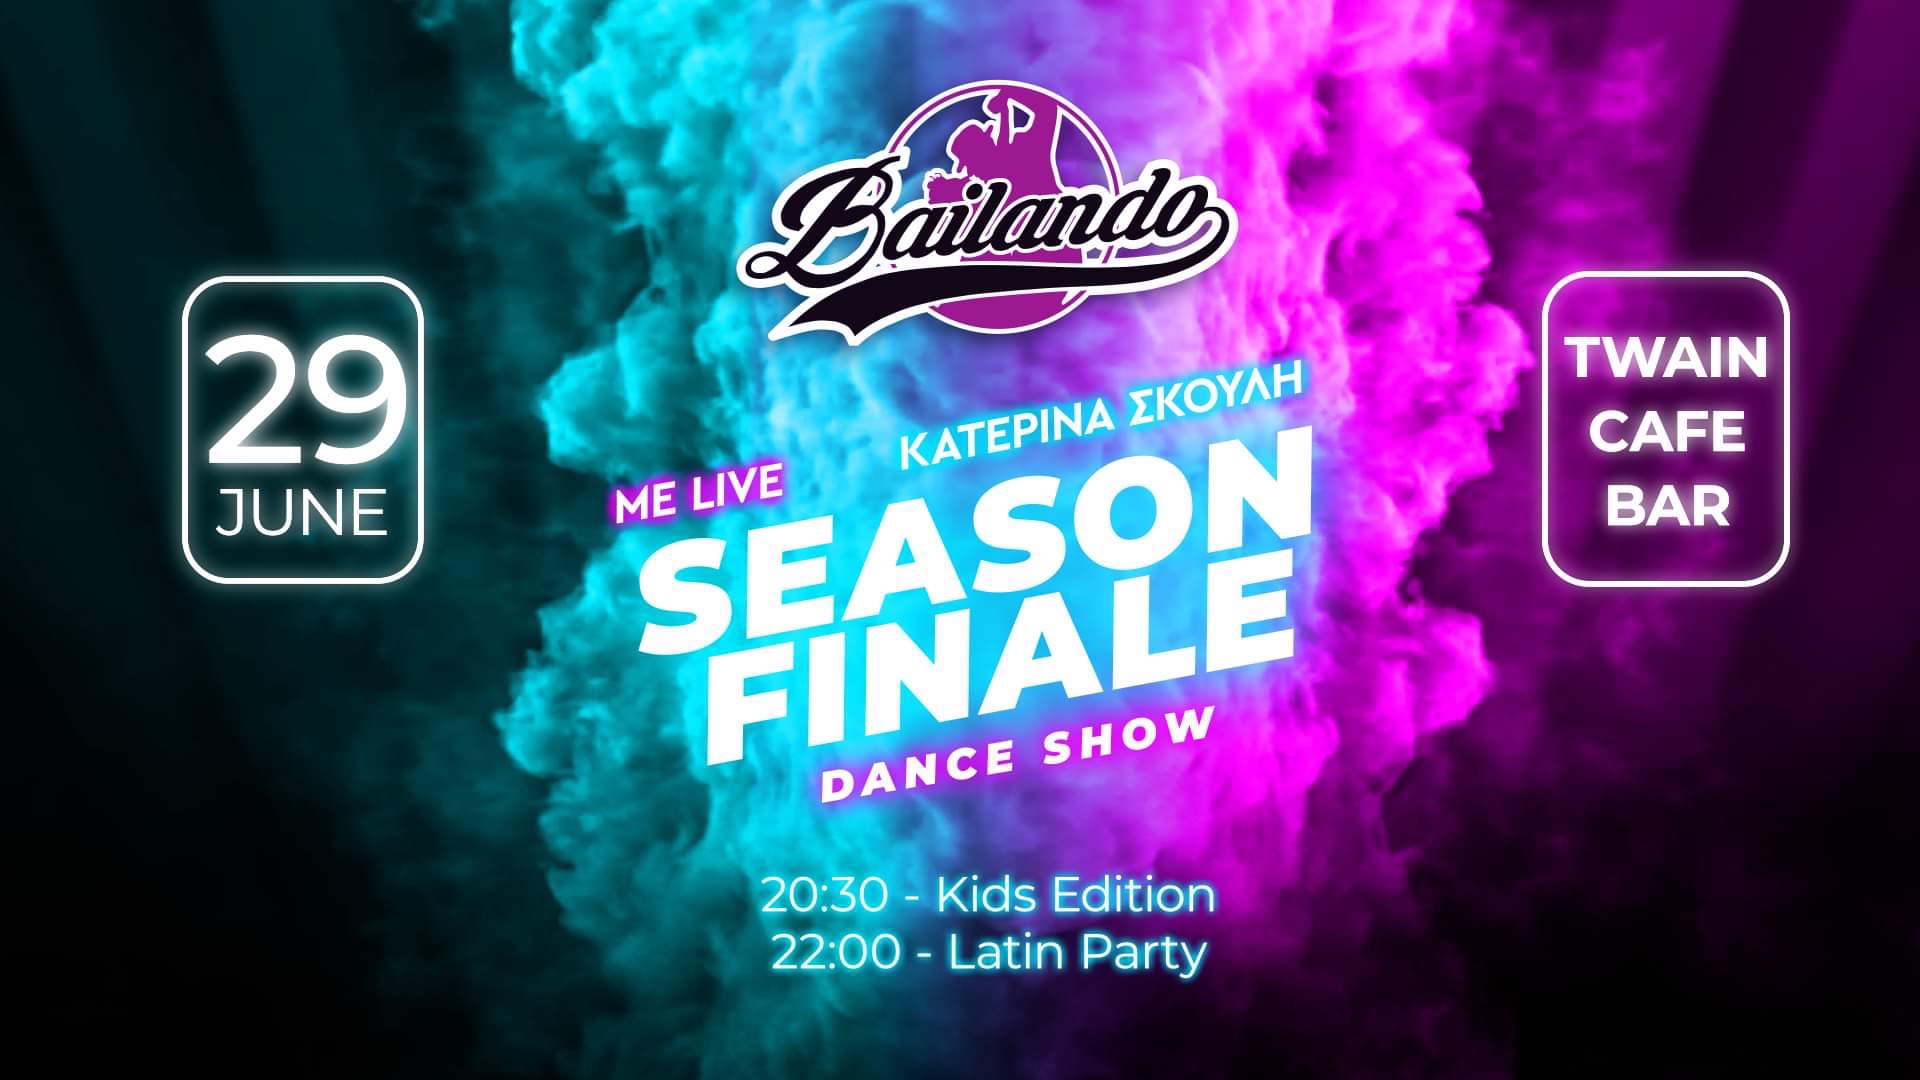 Bailando Season Finale Dance Show Live στο Άργος